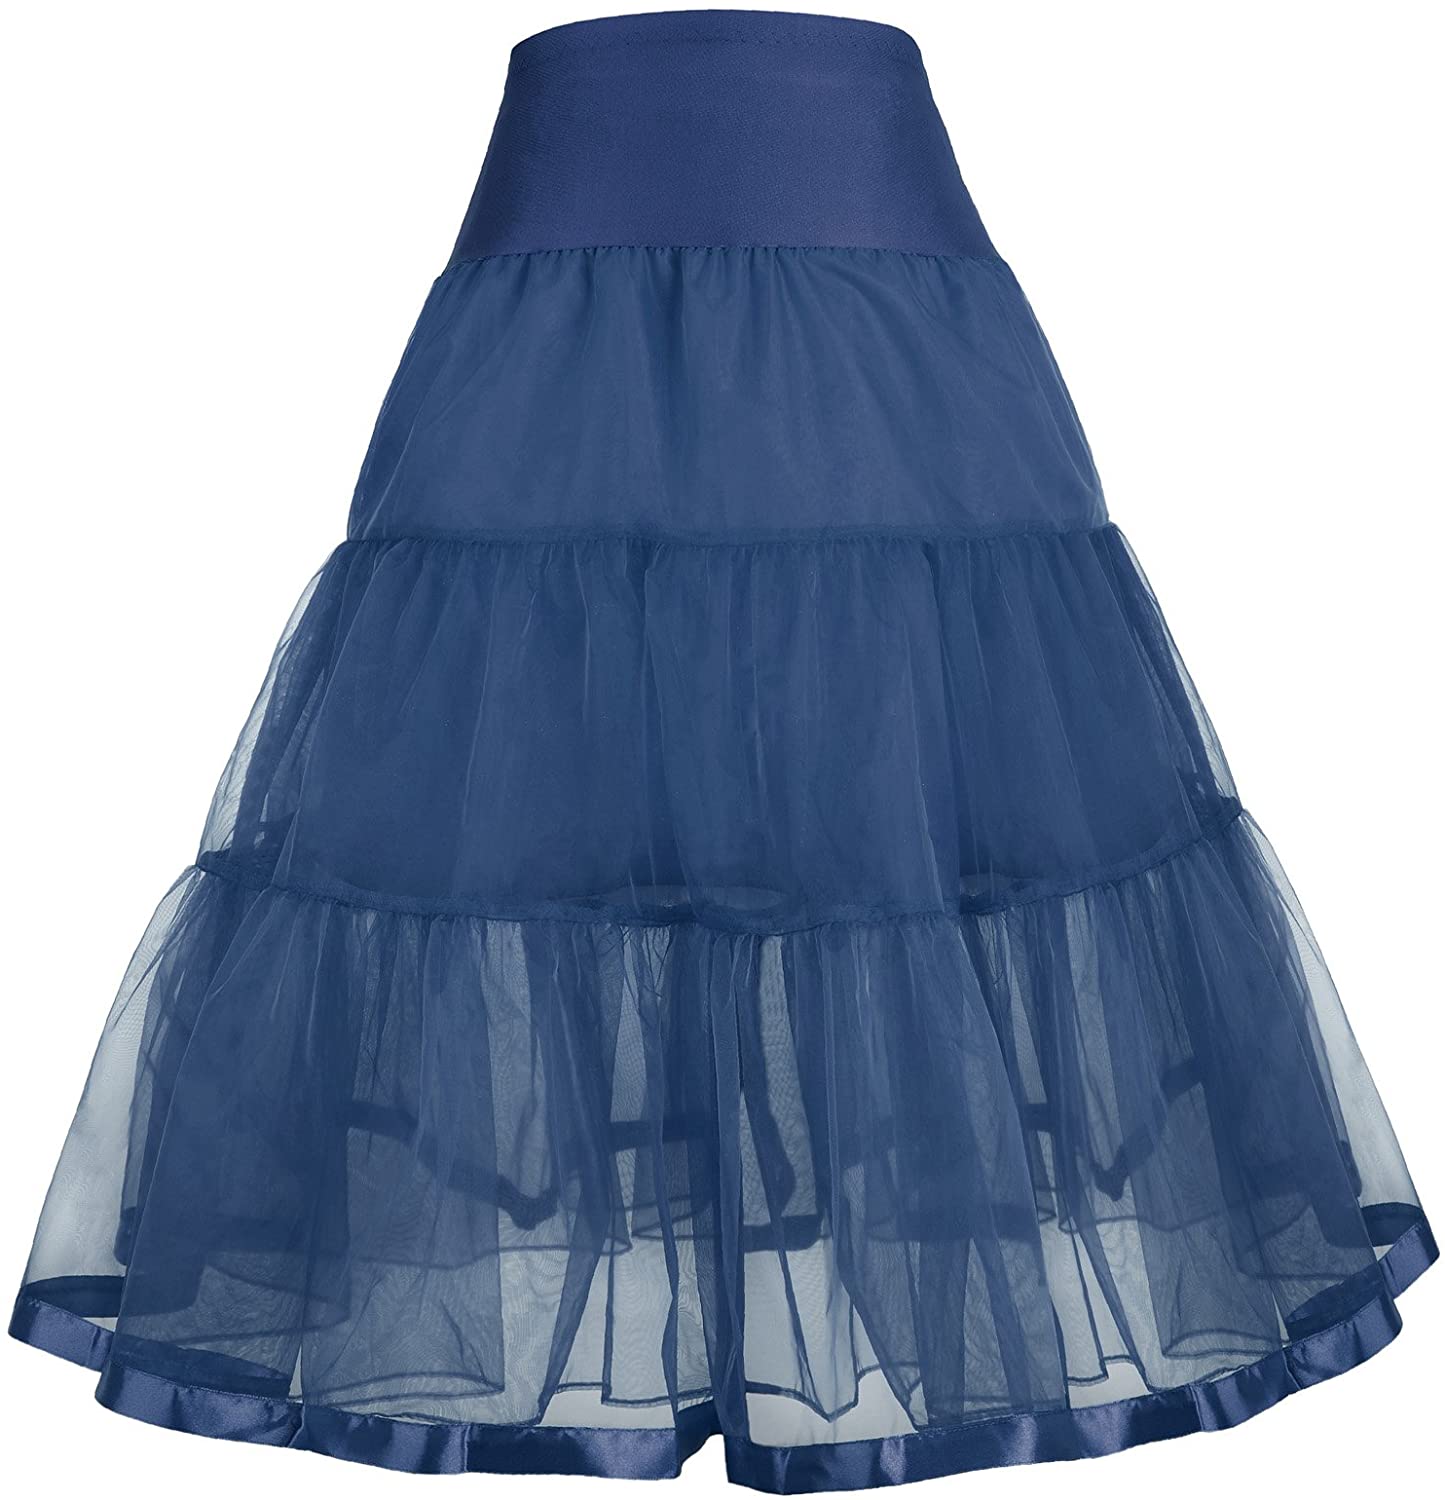 Long/Short GRACE KARIN Little Girl Voile Crinoline Tutu Petticoats